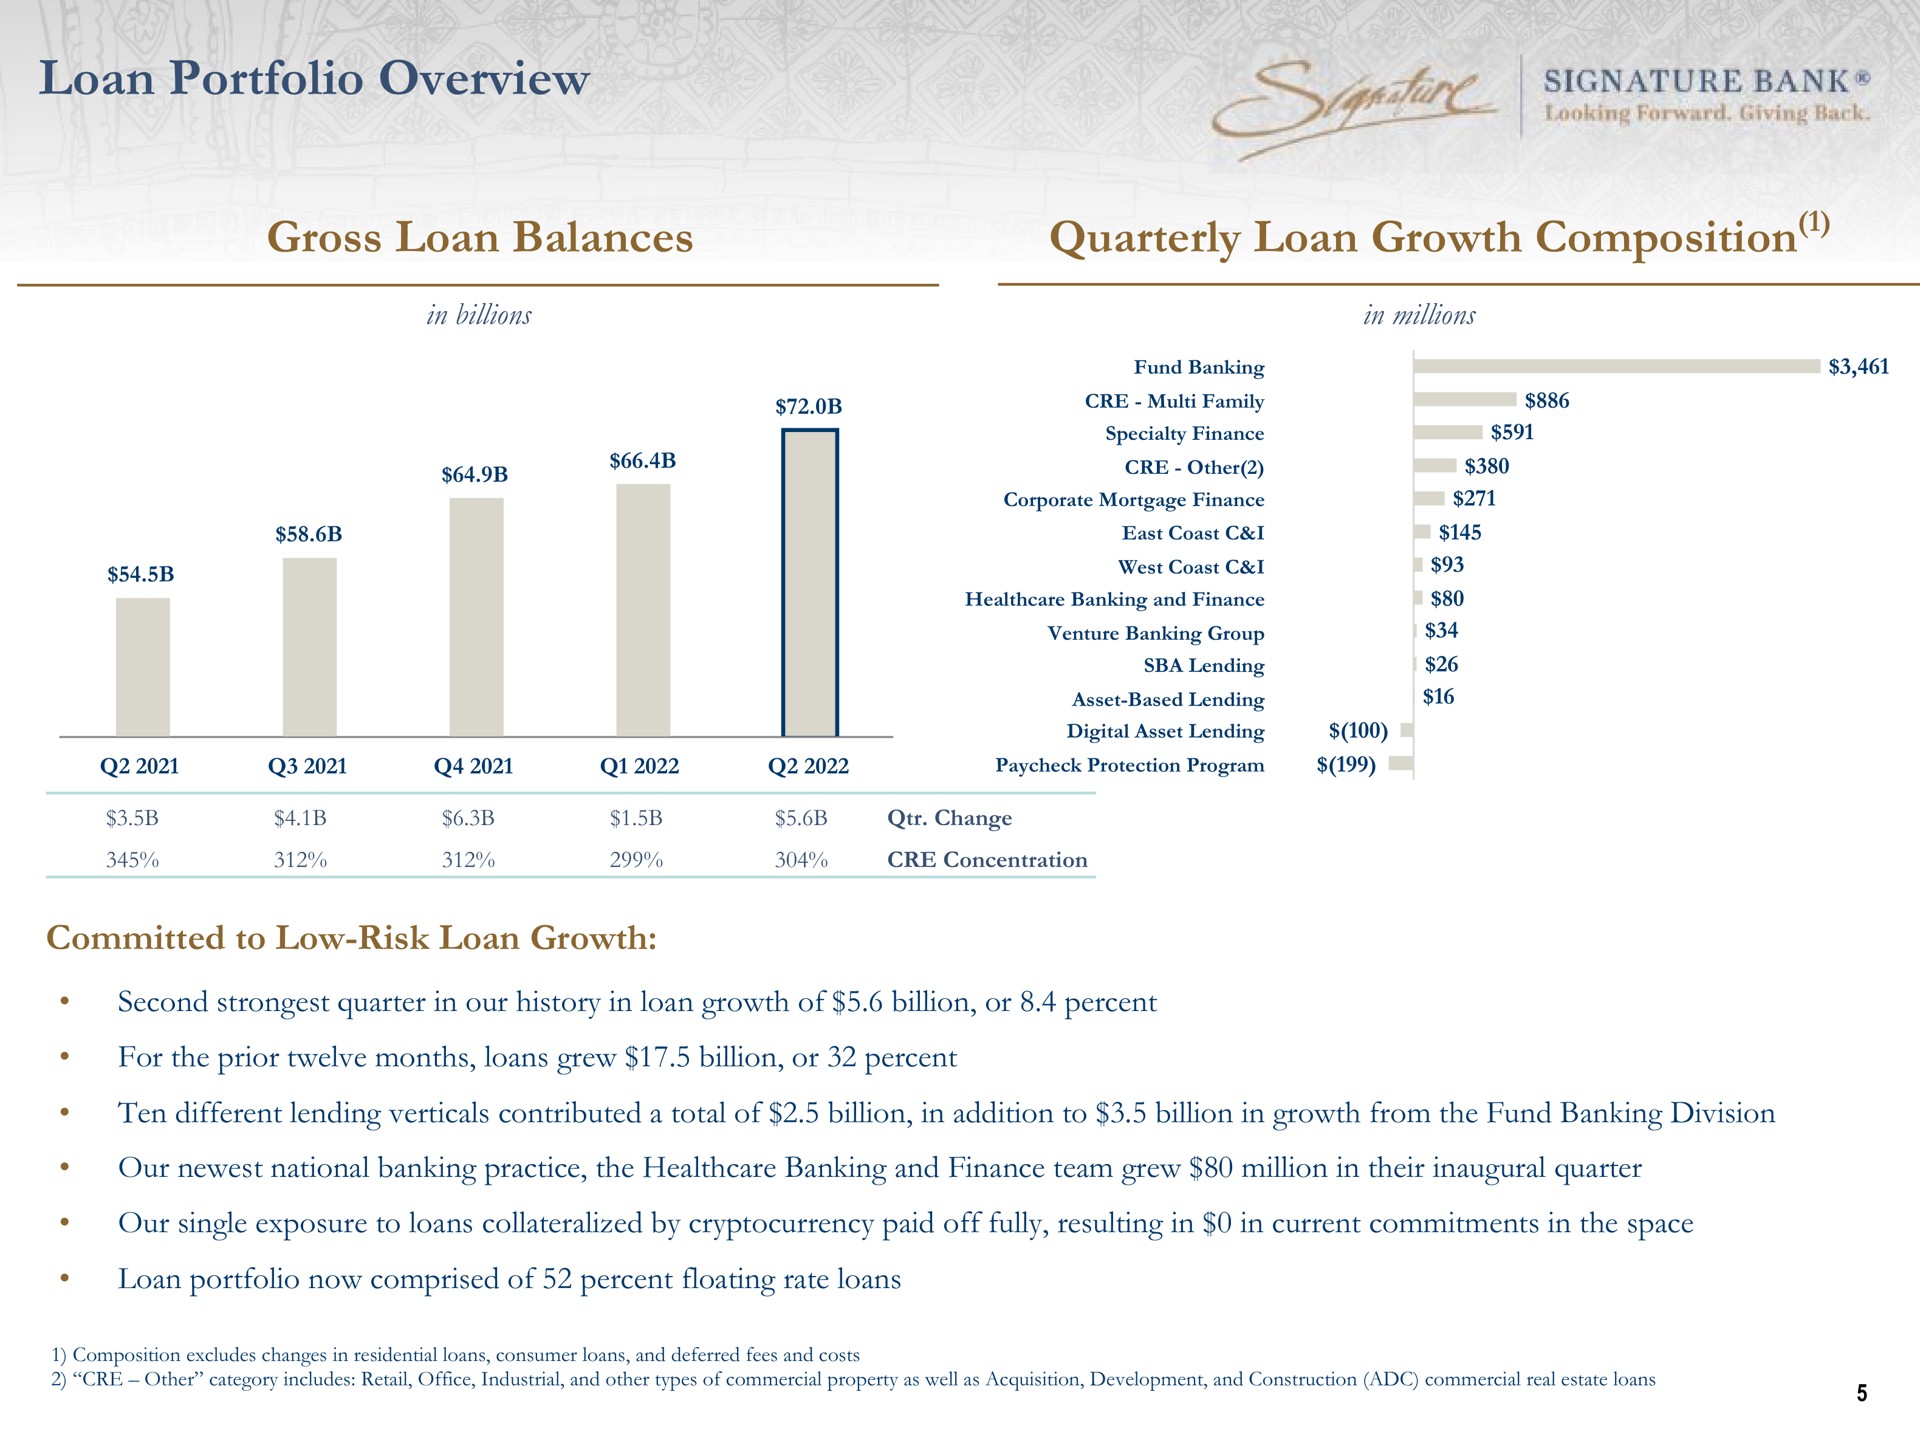 loan portfolio overview gross loan balances quarterly loan growth composition spot signature bank | Signature Bank